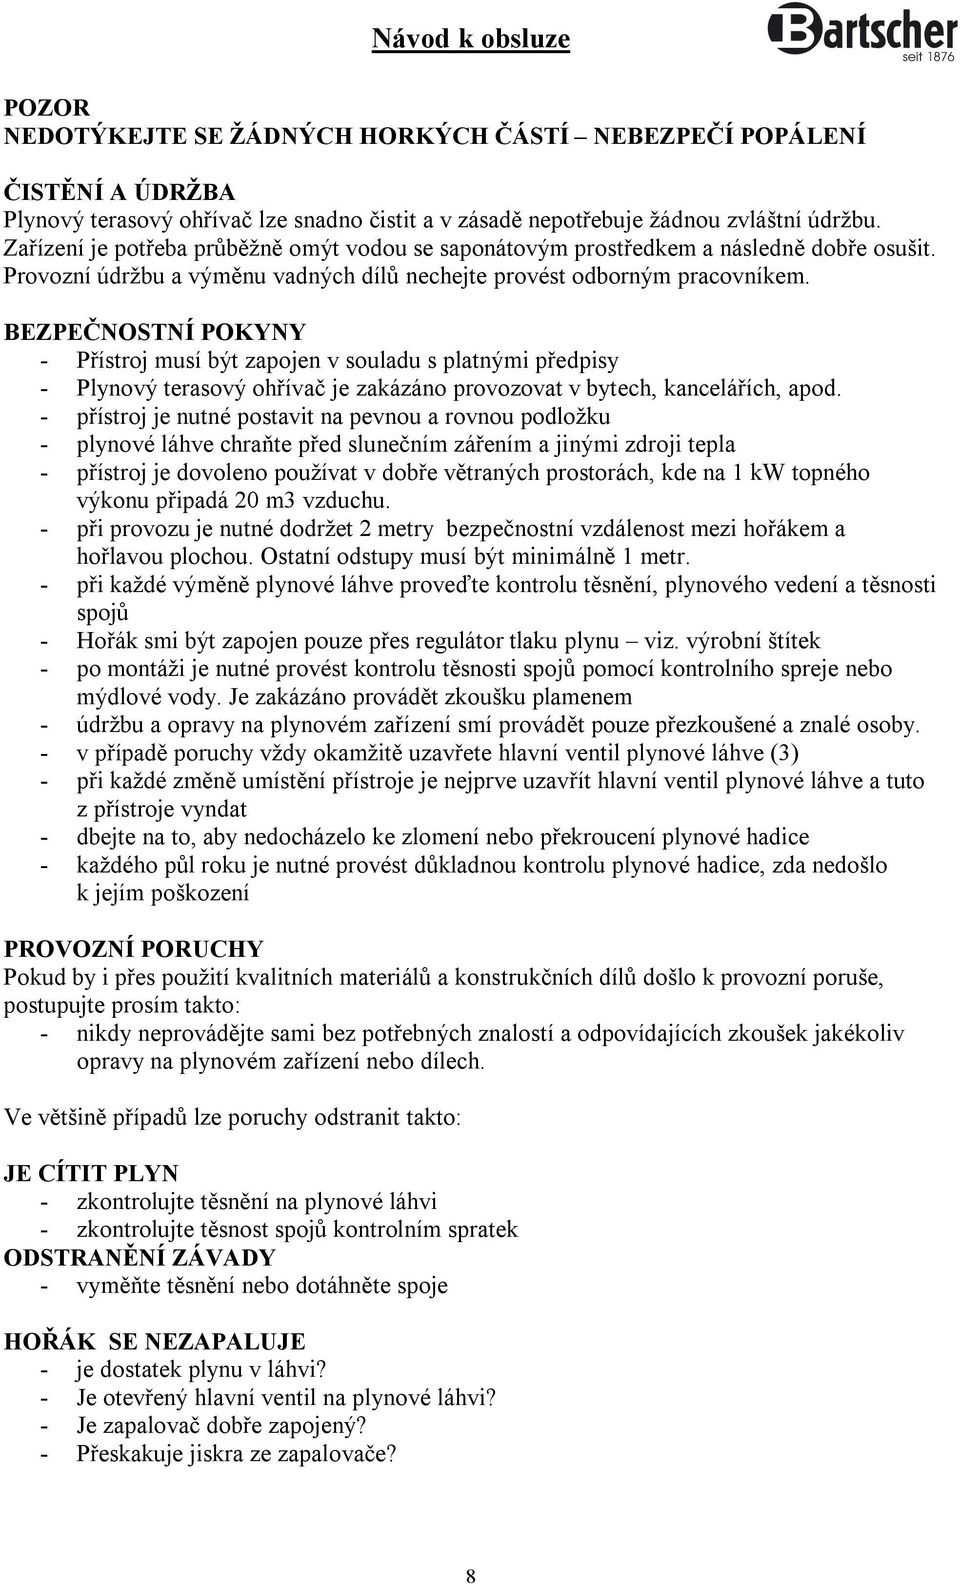 Plynový terasový ohřívač - pojízdný - PDF Free Download